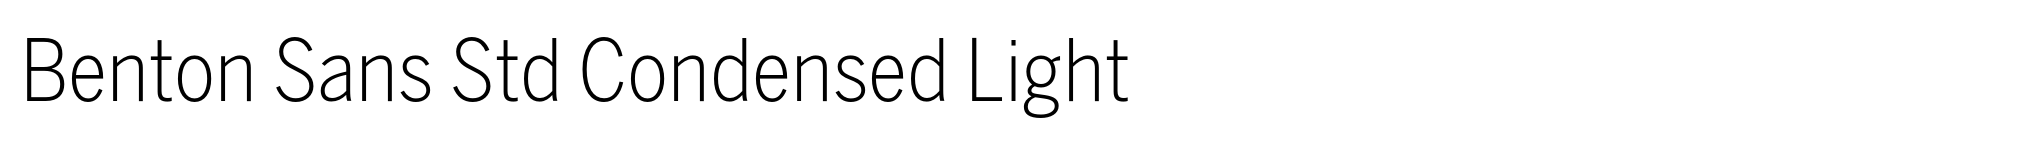 Benton Sans Std Condensed Light image